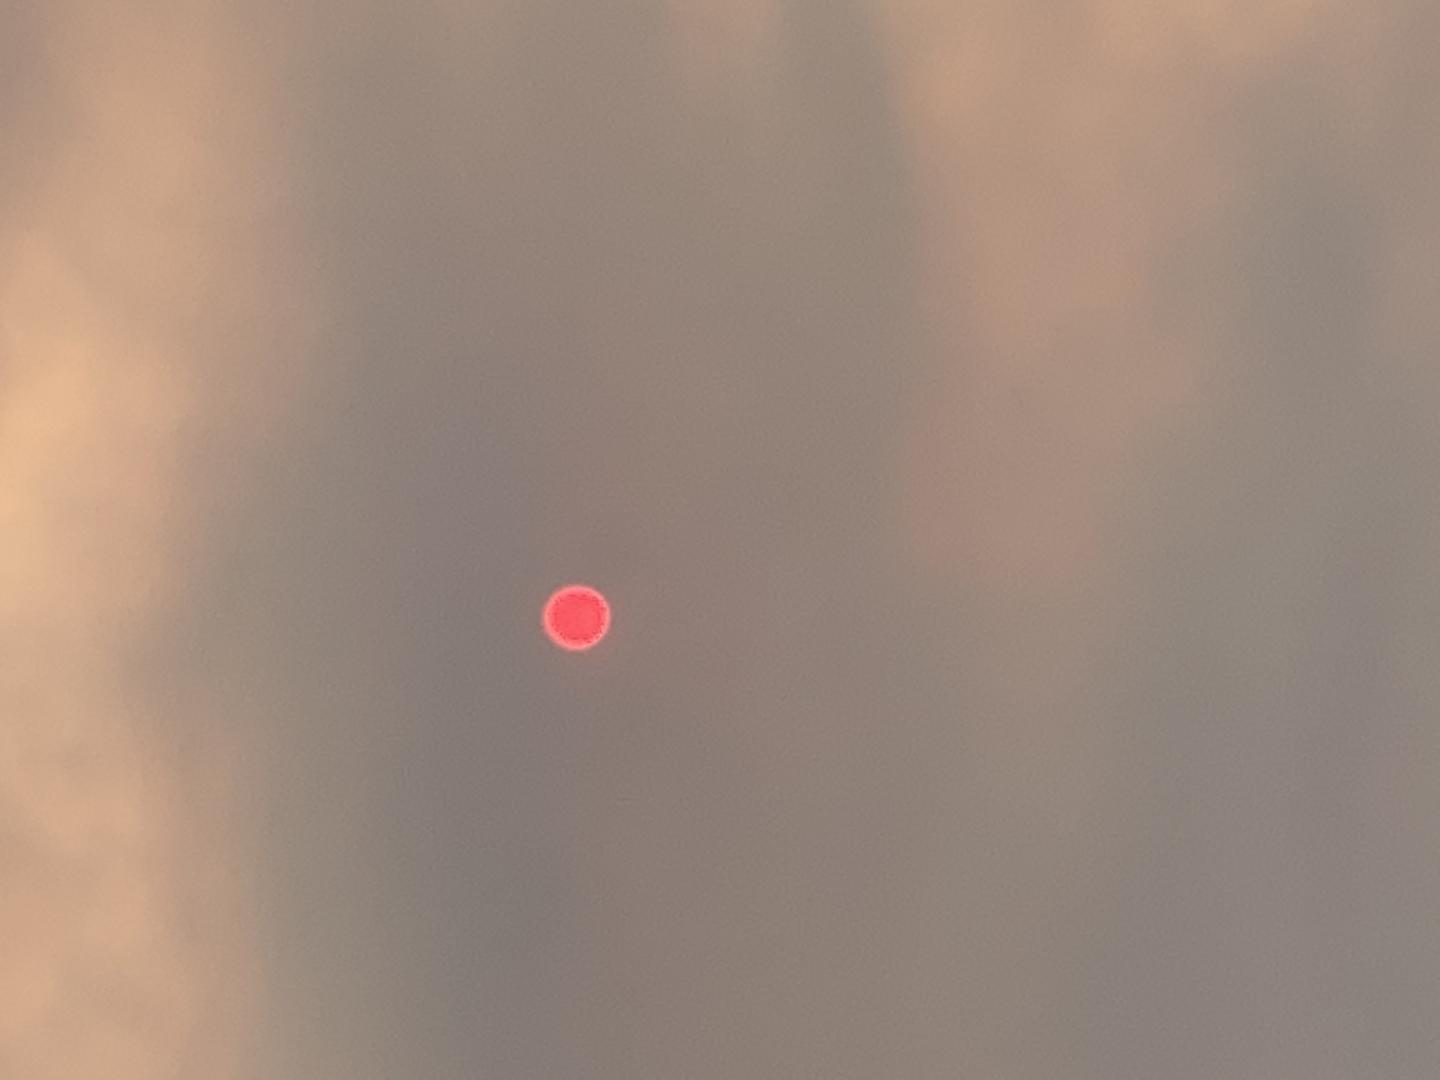 Red Sun Closeup [IMAGE] EurekAlert! Science News Releases